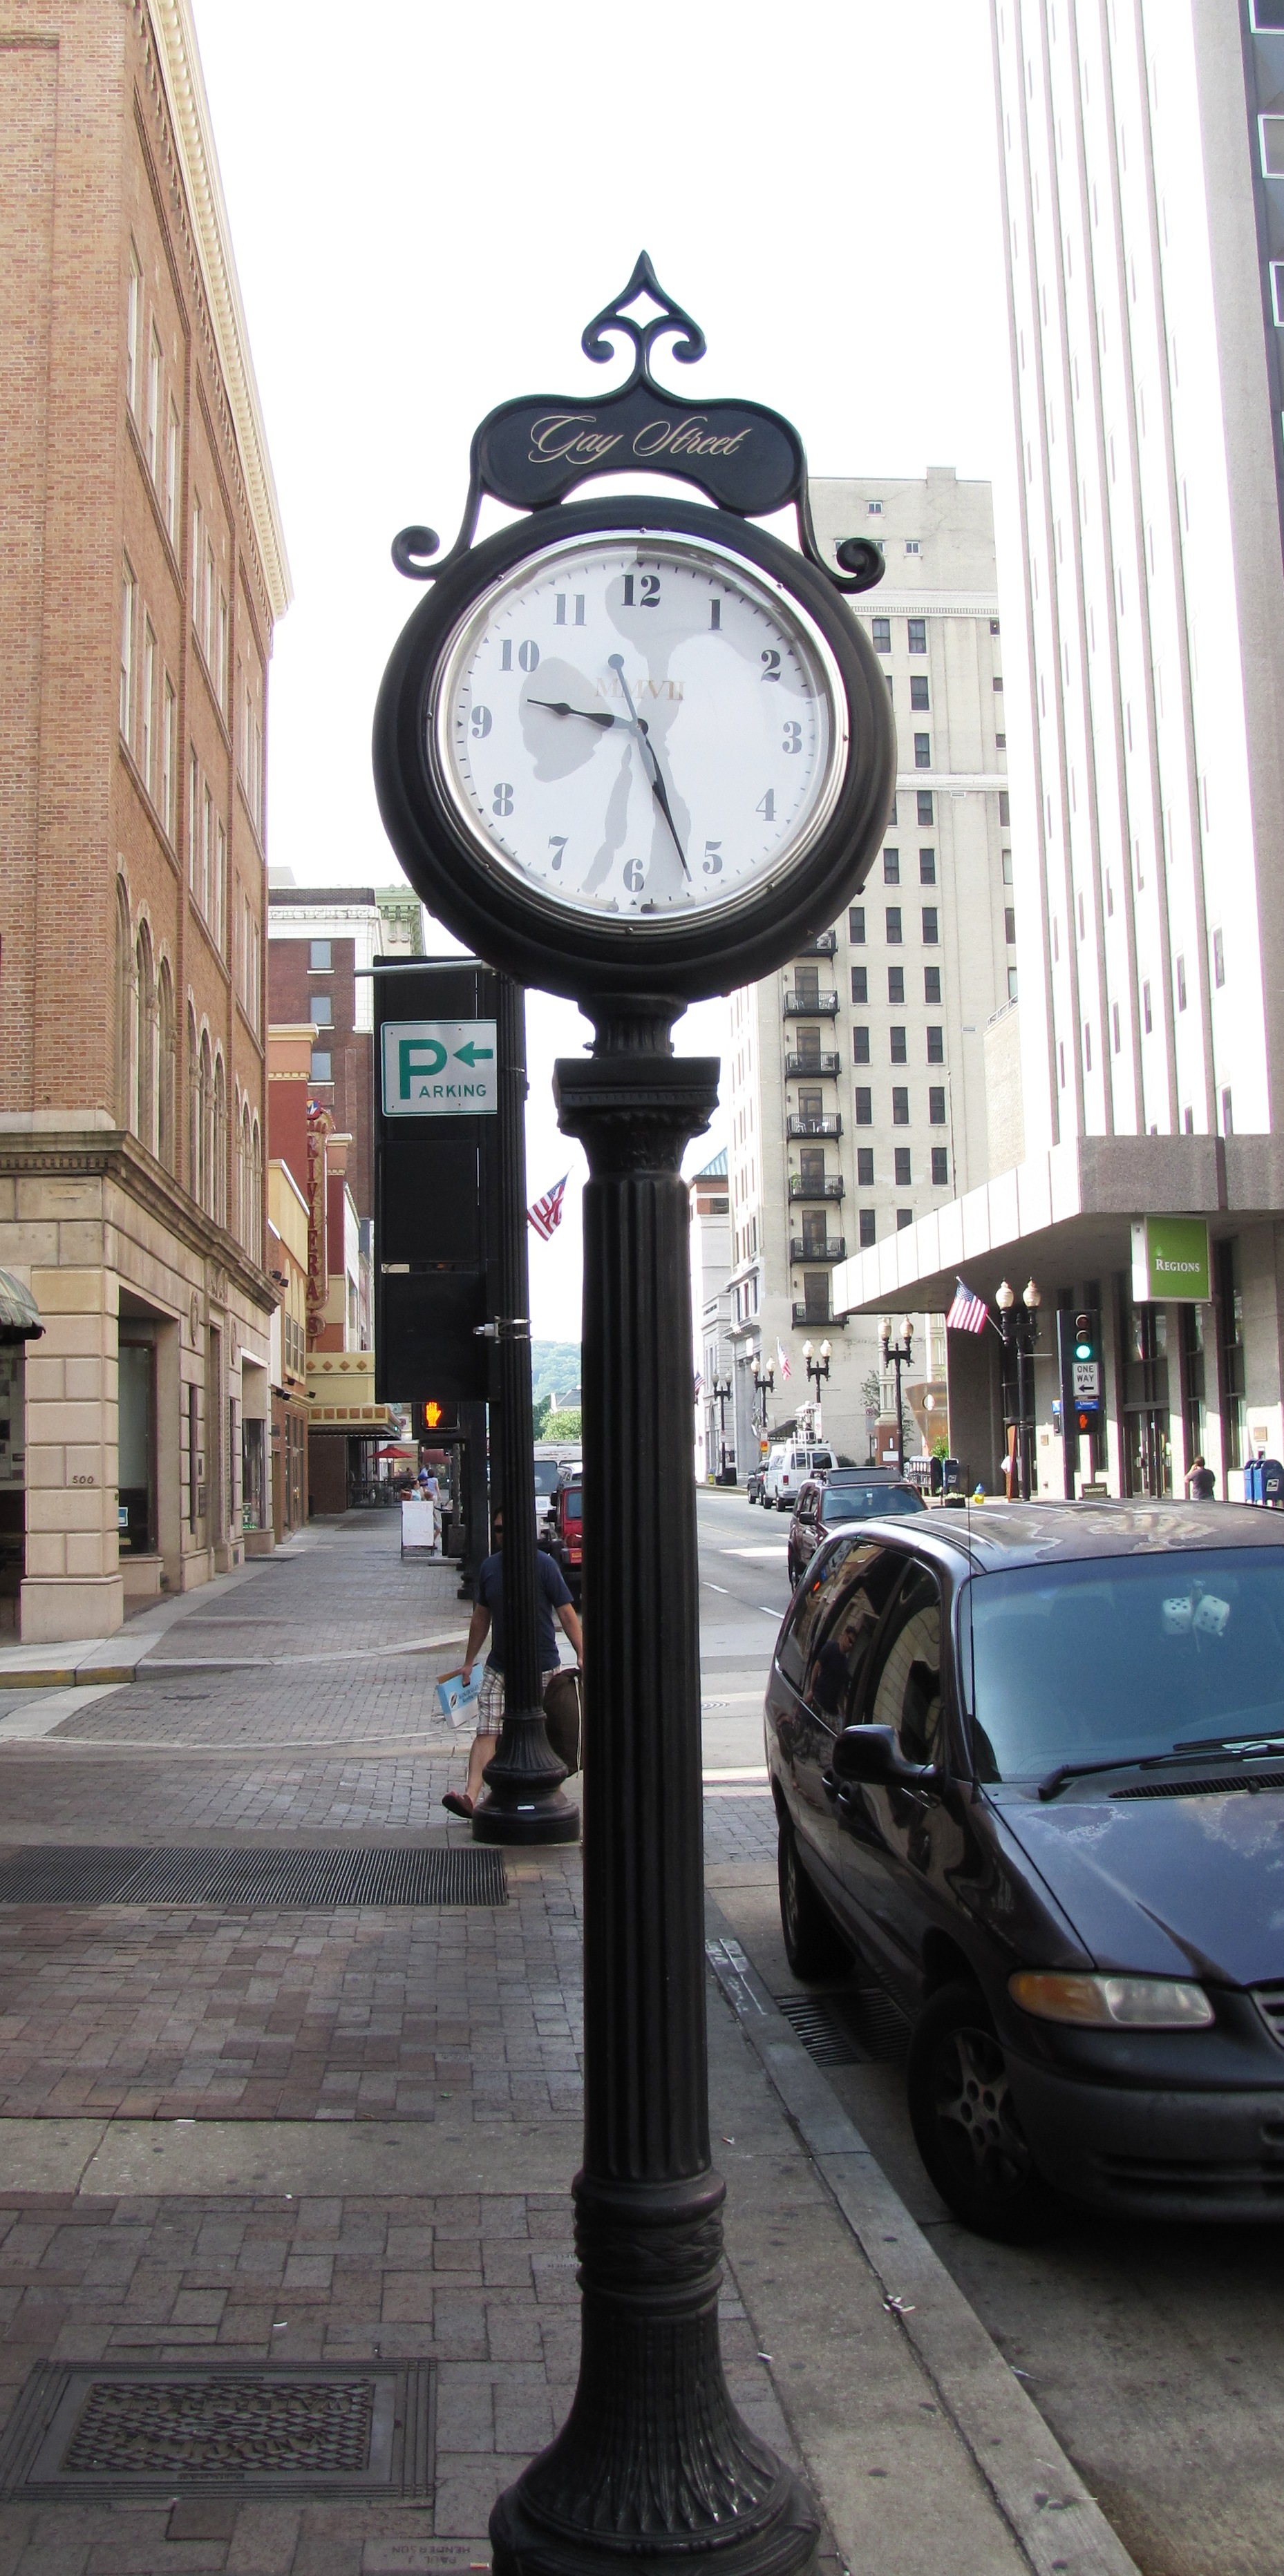 File:Gay-street-clock-2007-tn1.jpg - Wikimedia Commons